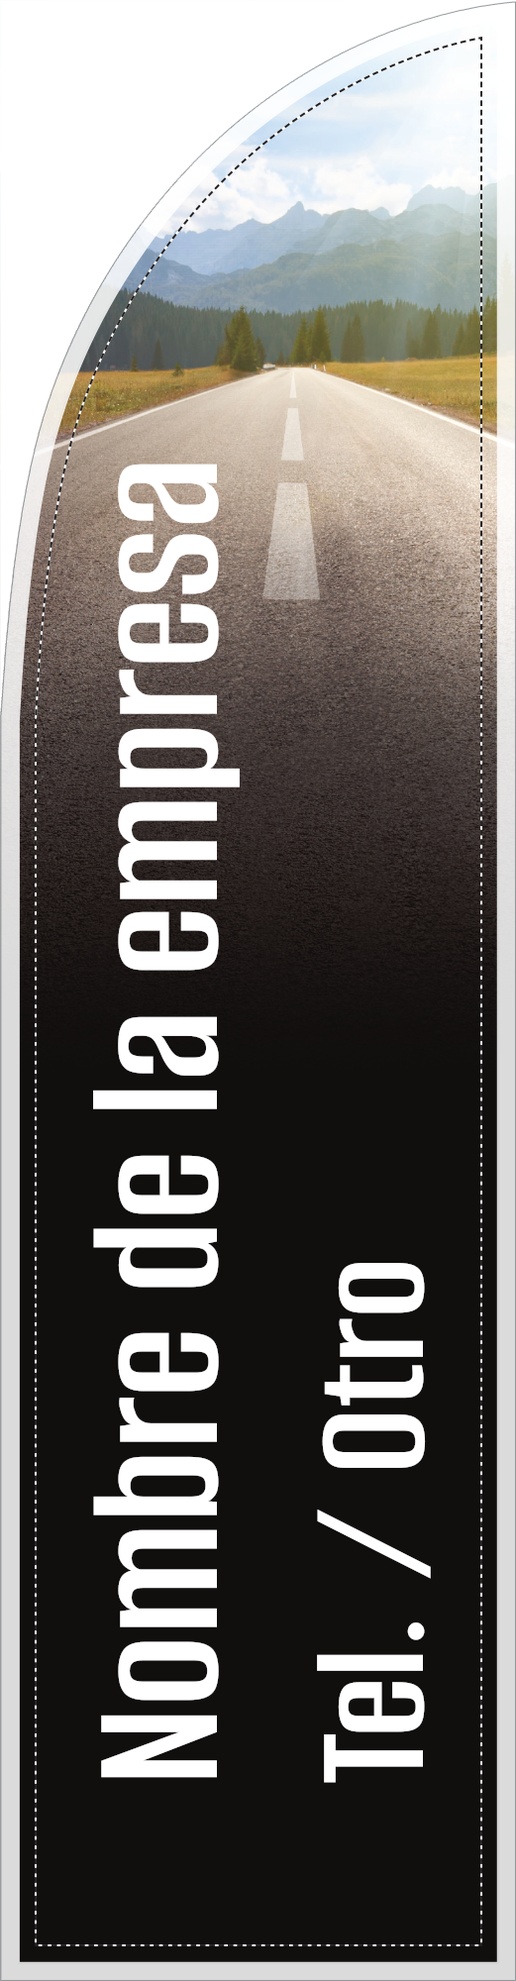 Un lámina オープンロード diseño negro blanco